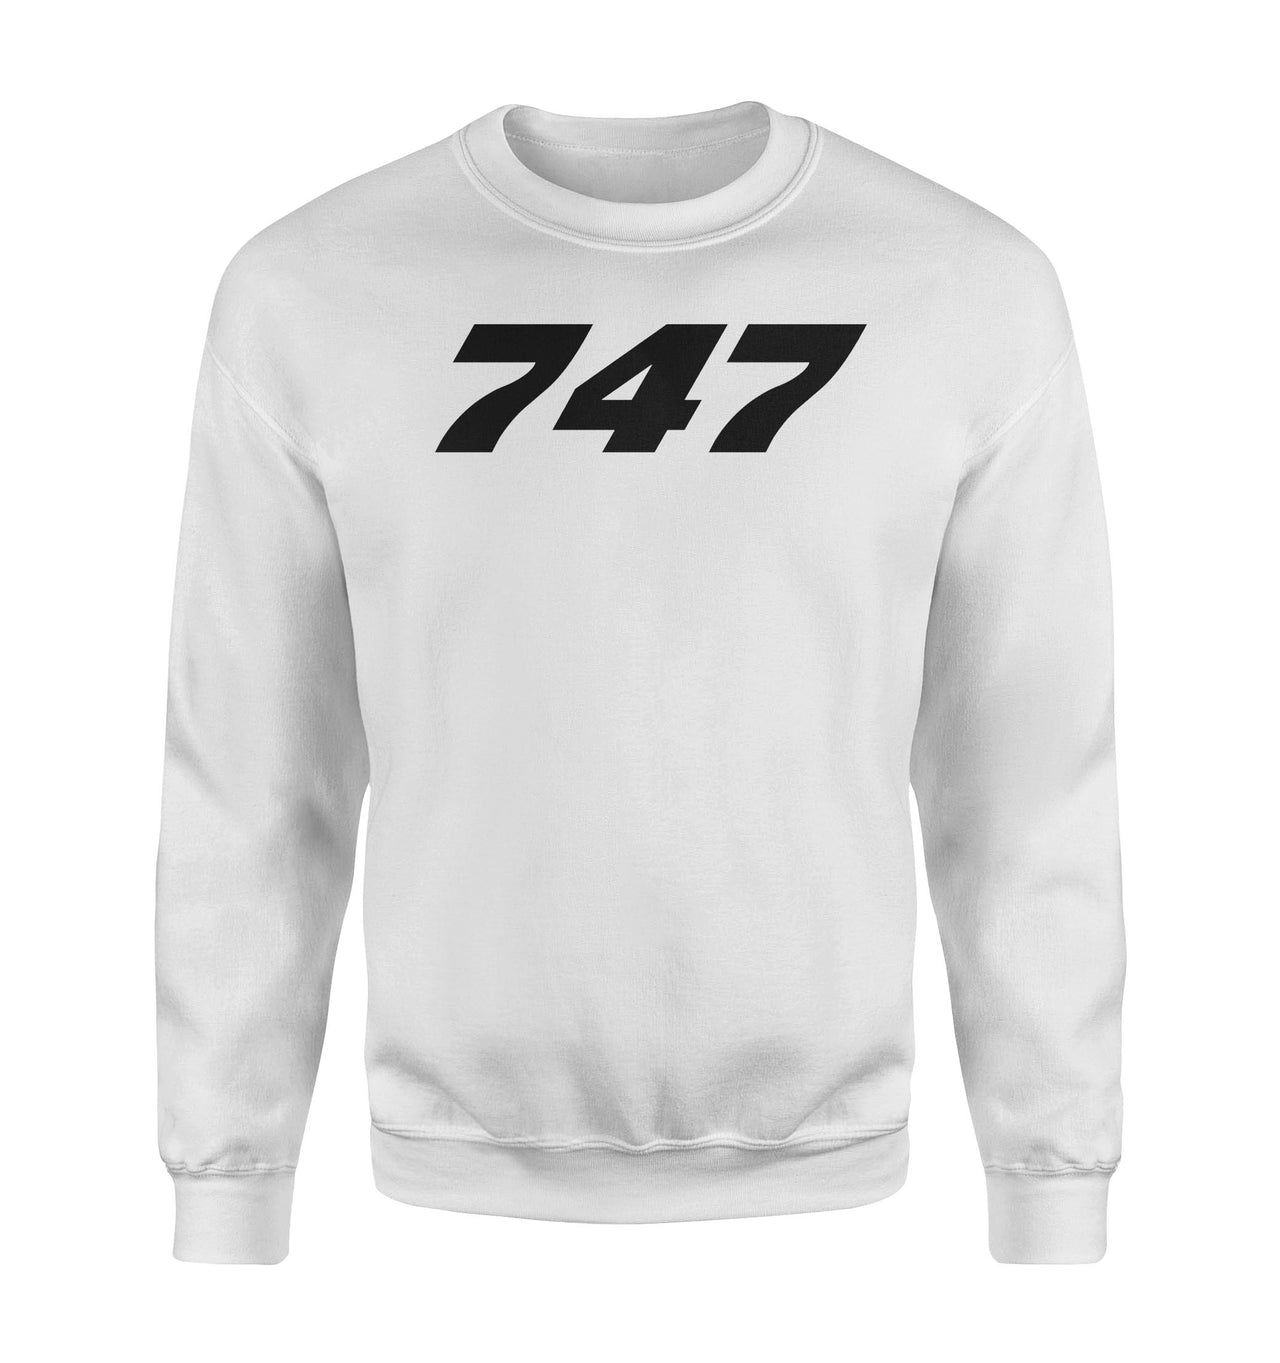 747 Flat Text Designed Sweatshirts